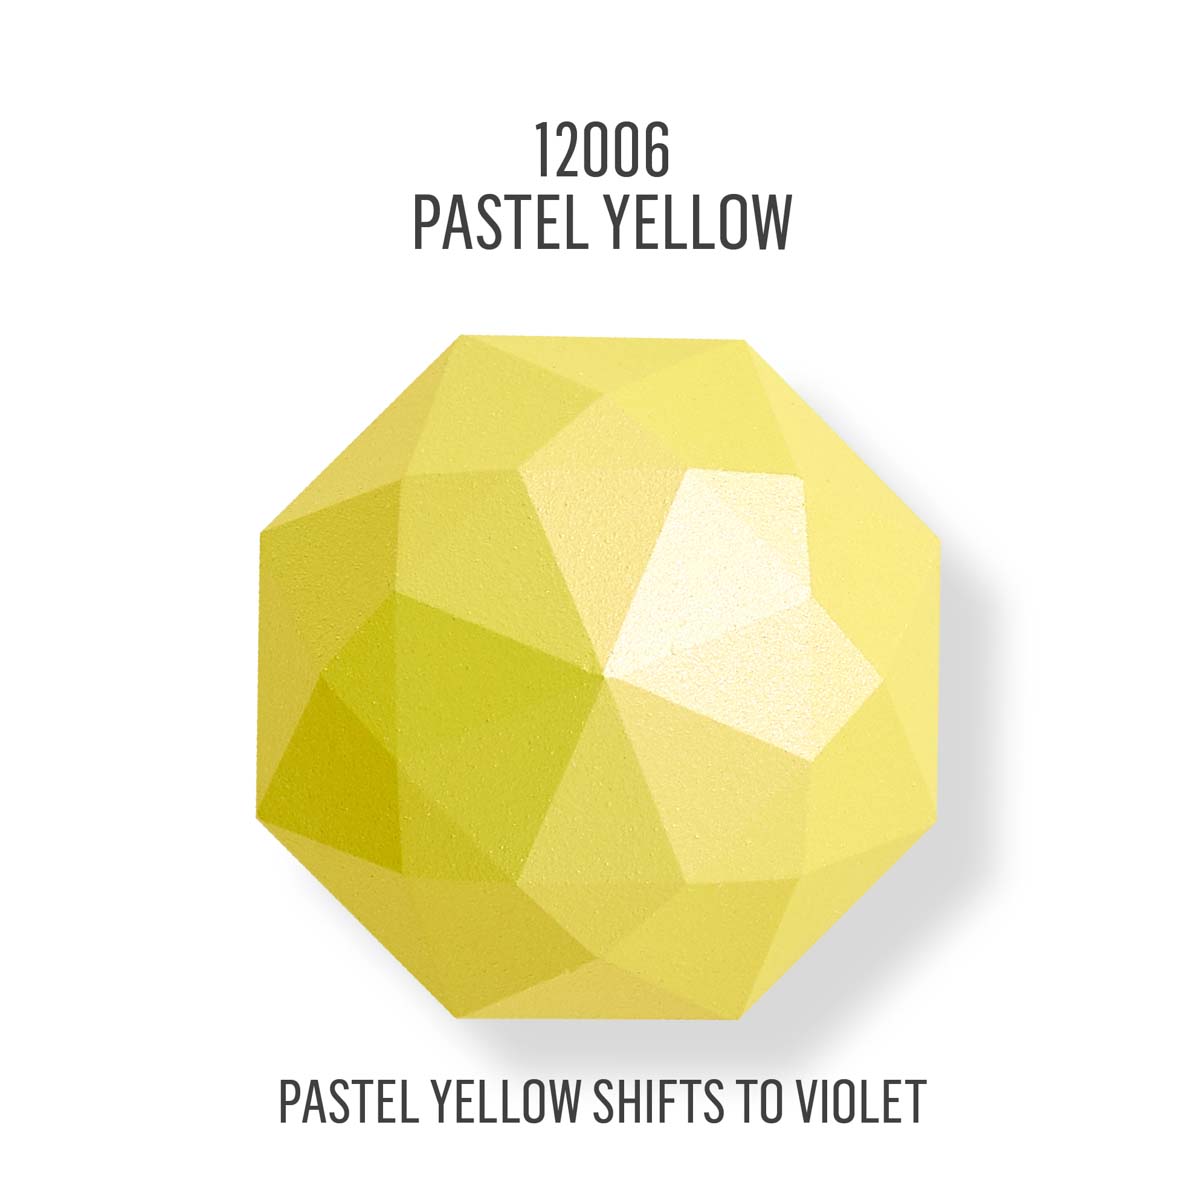 FolkArt ® Color Shift™ Acrylic Paint - Pastel Yellow, 2 oz. - 12006